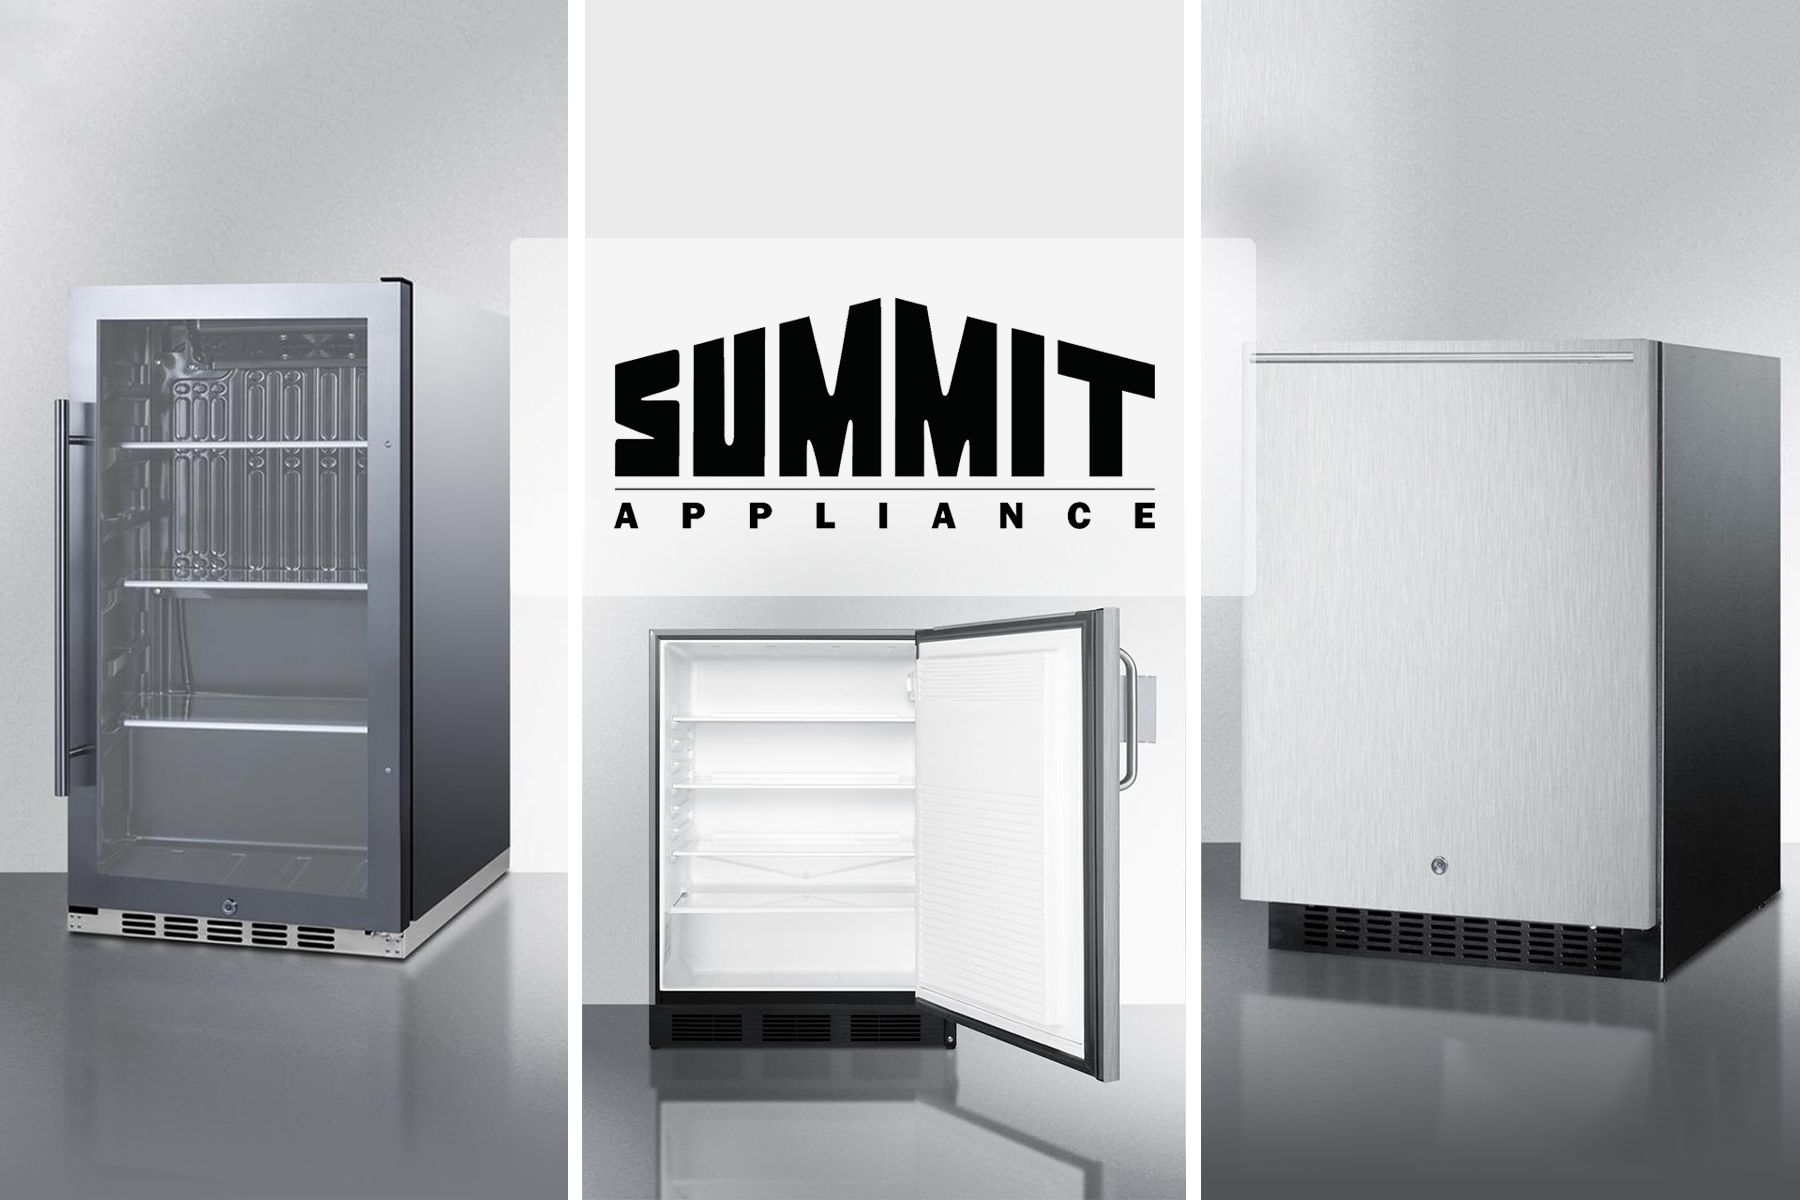 Summit Appliance